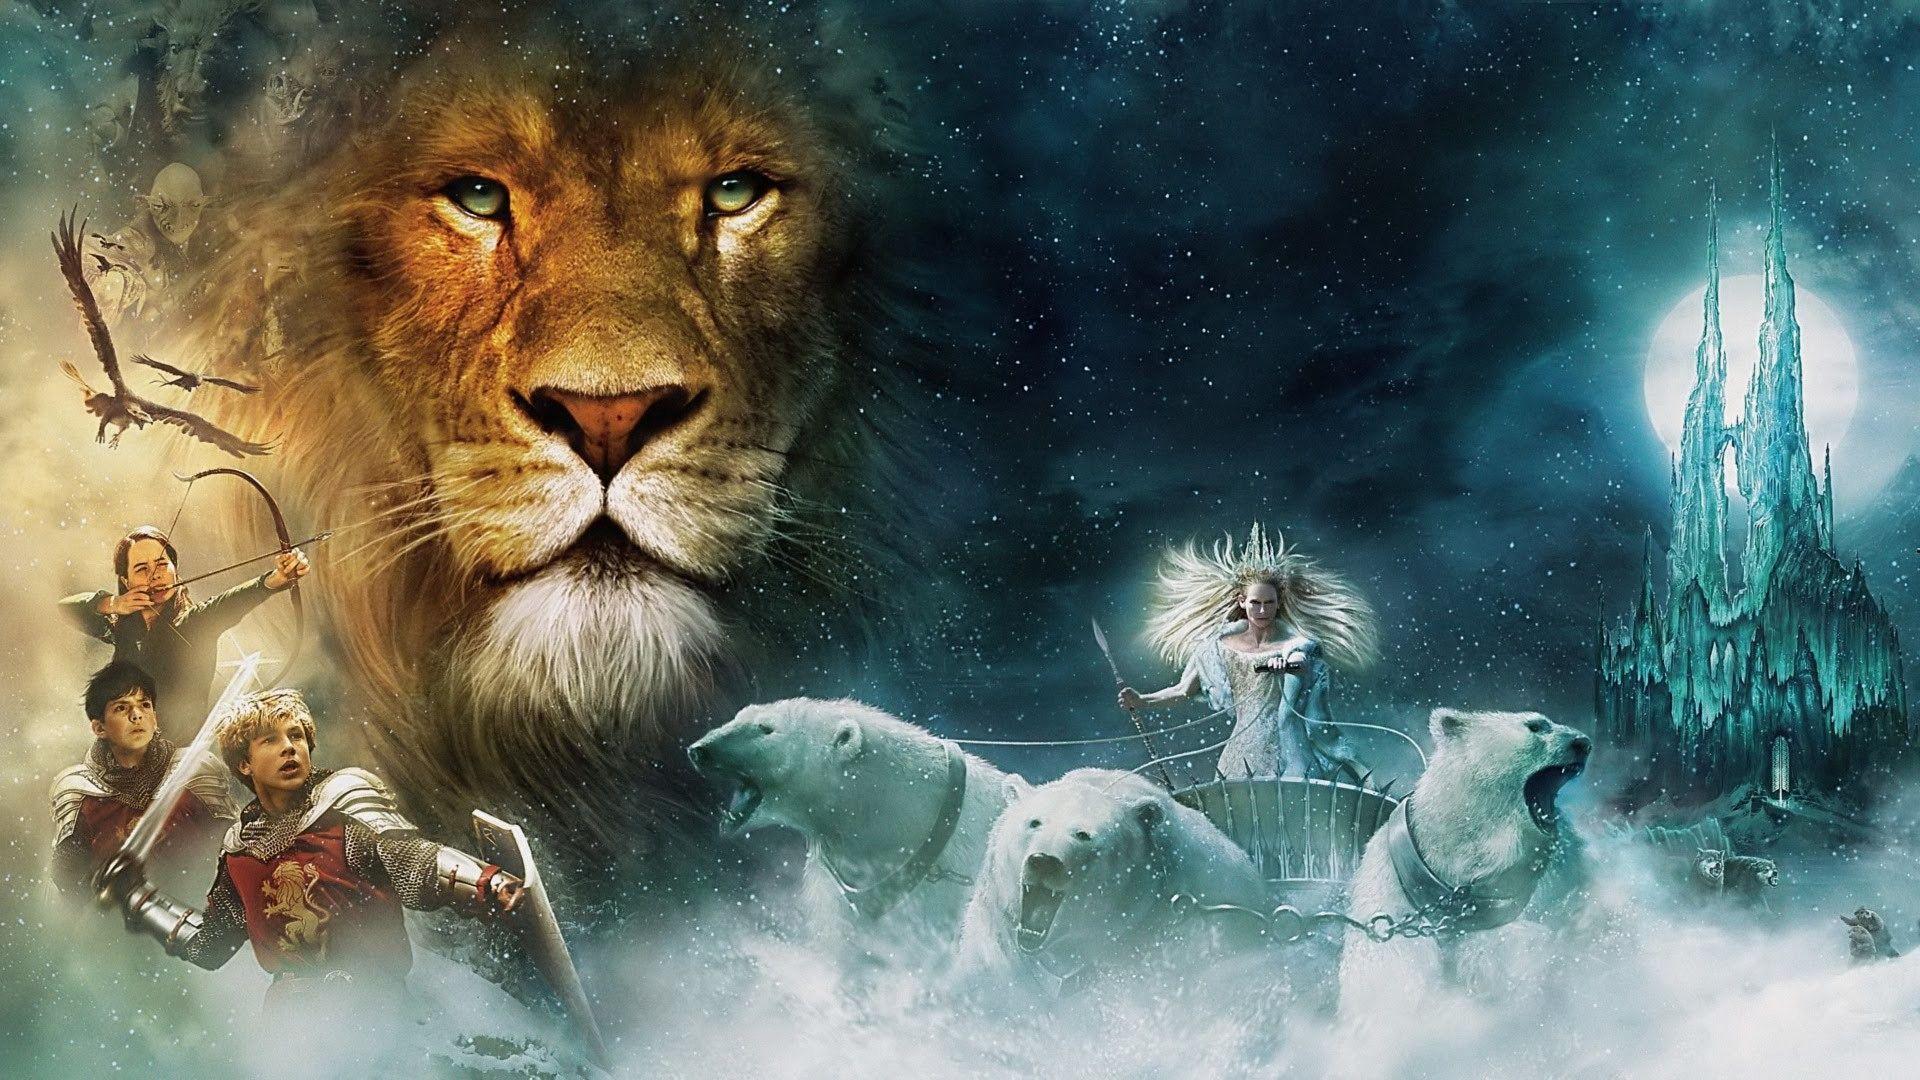 Narnia Aslan Wallpaper (the best image in 2018)